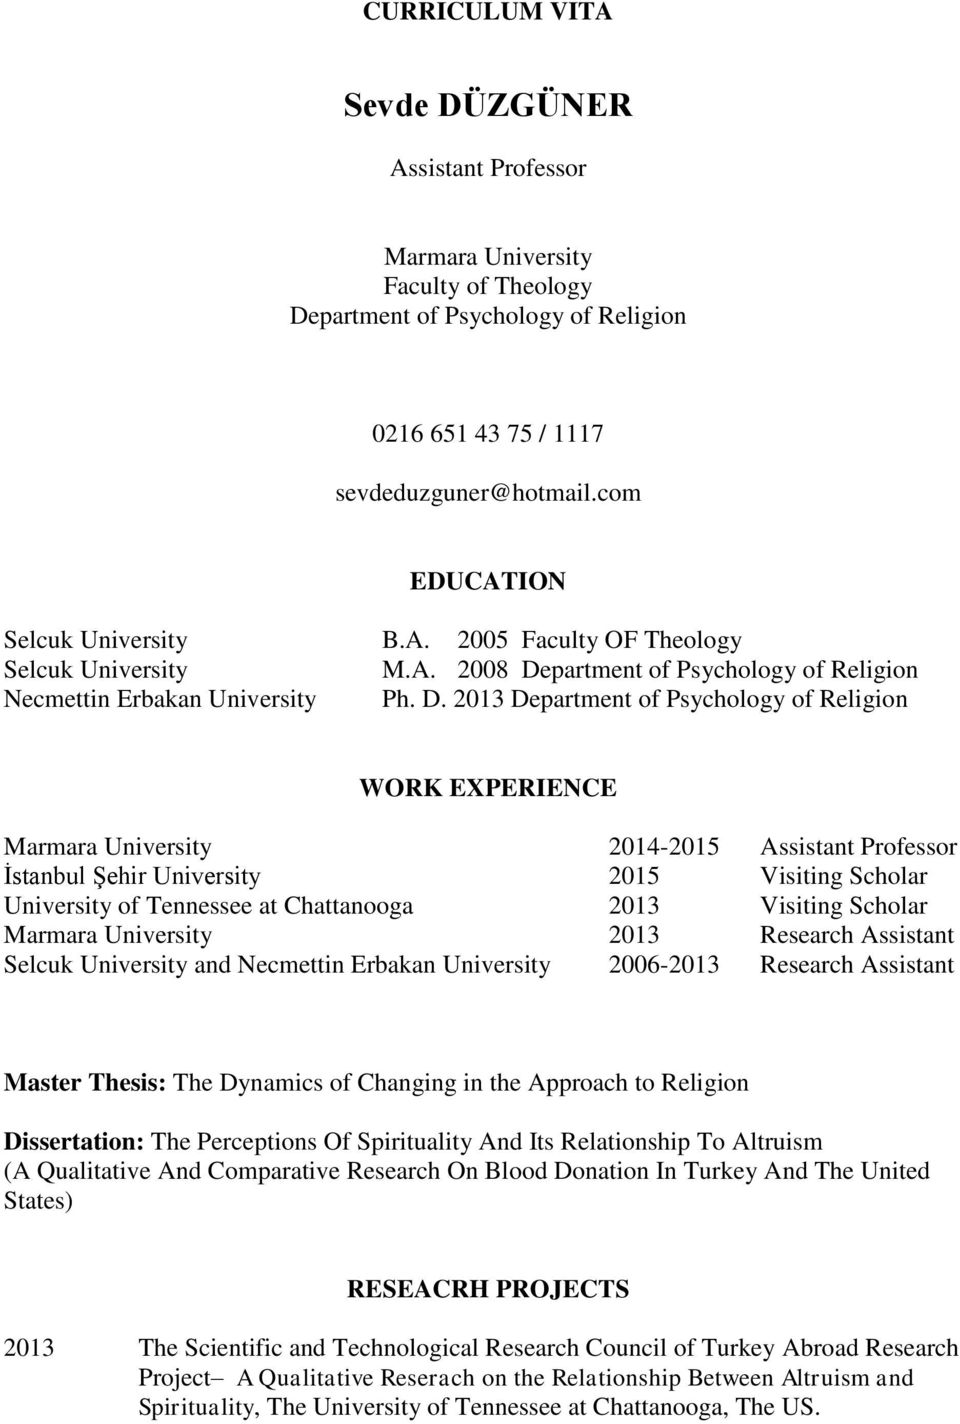 partment of Psychology of Religion Necmettin Erbakan University Ph. D.